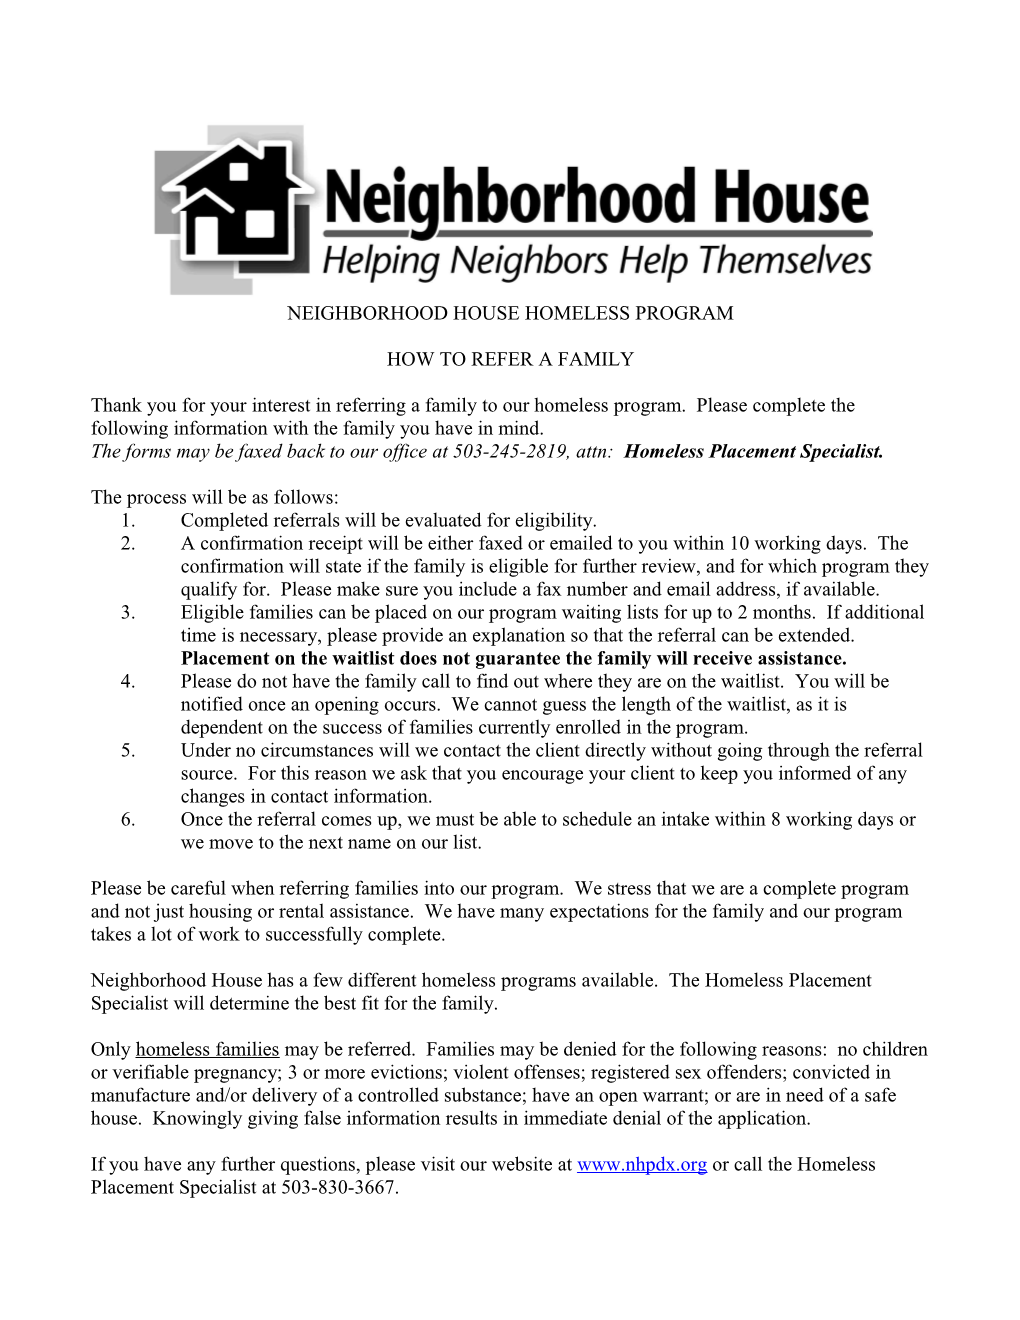 Neighborhood House Homeless Program